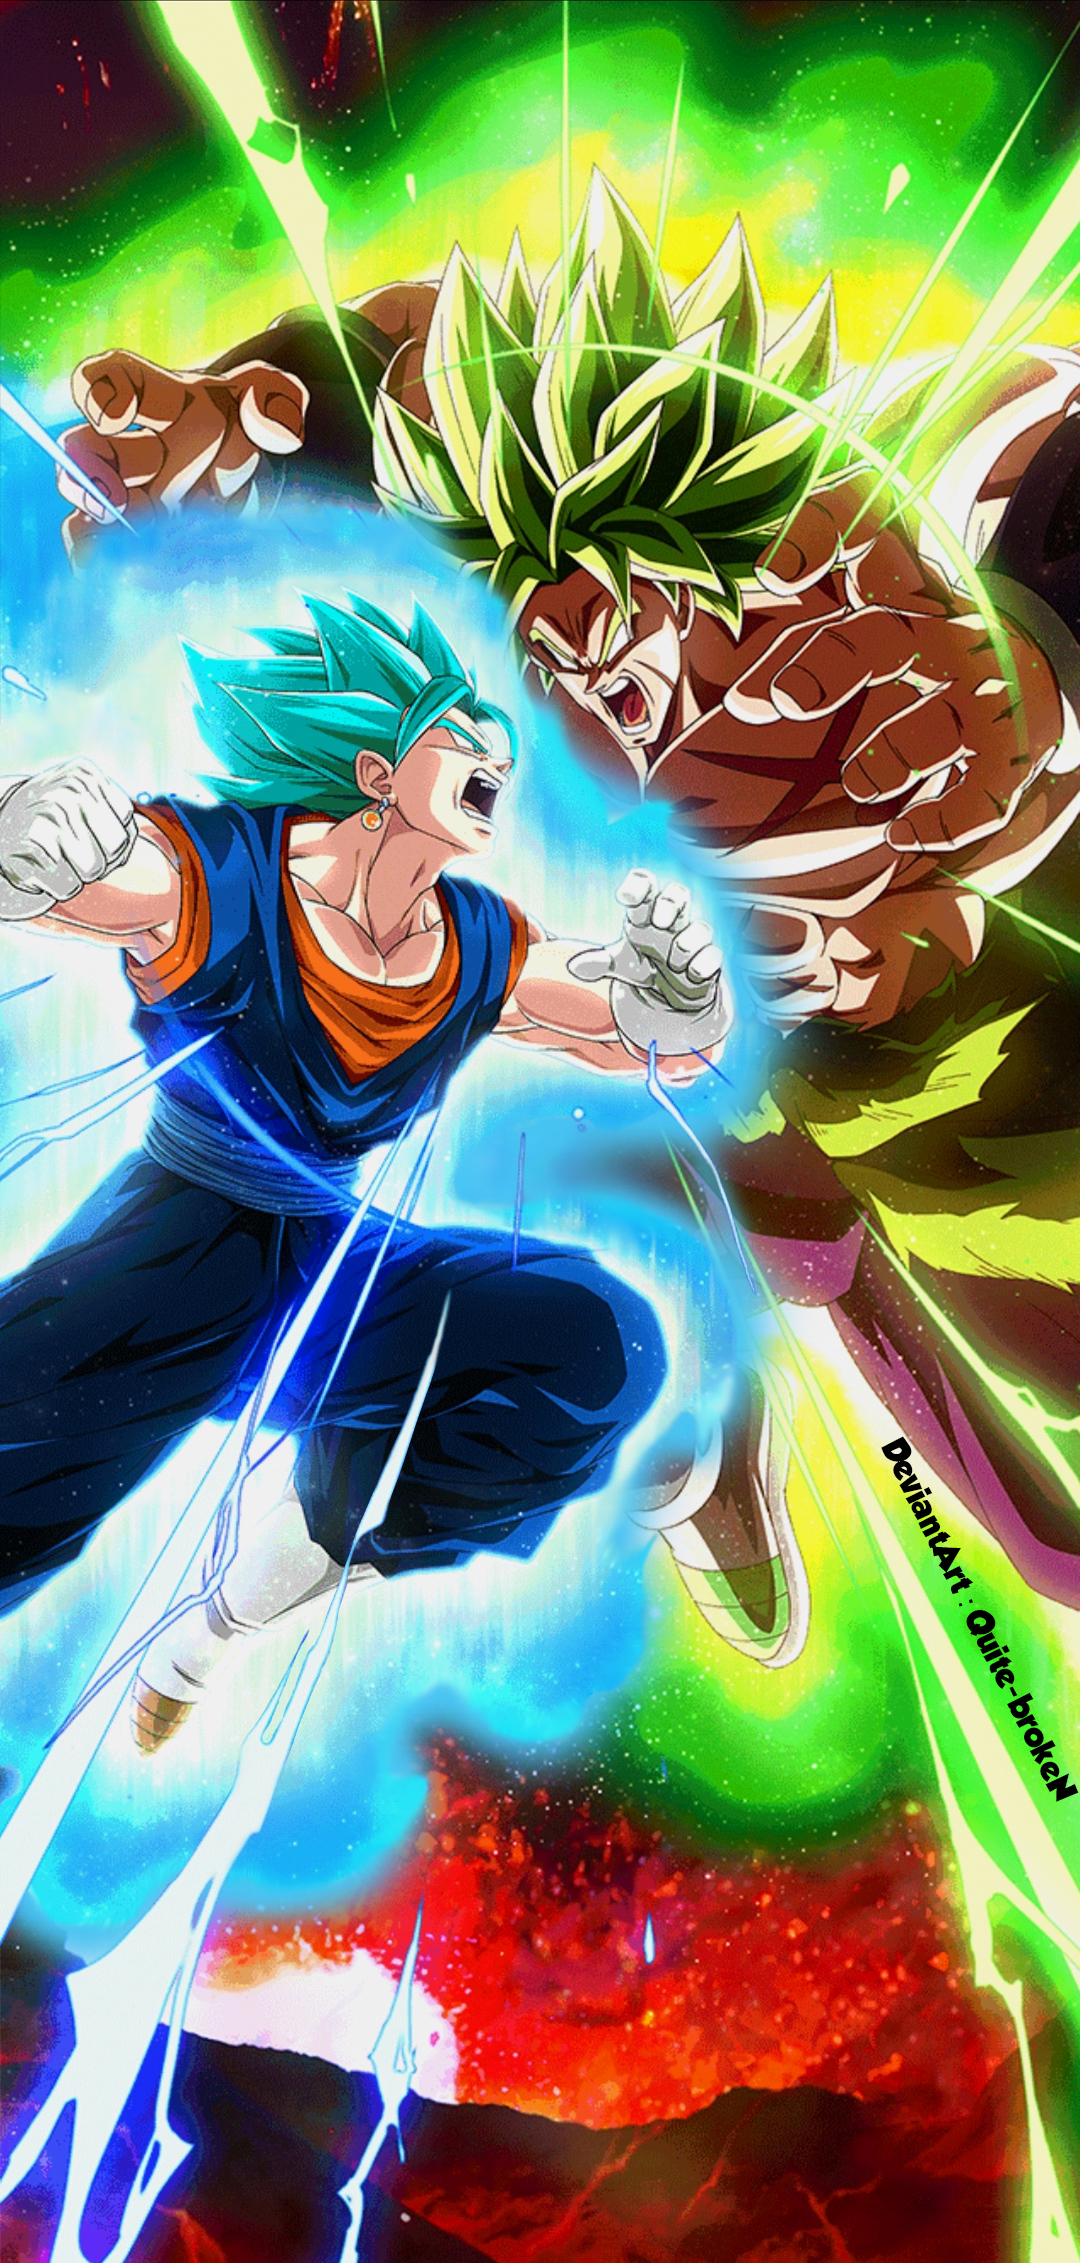 Break - Broly vs Goku and Vegeta